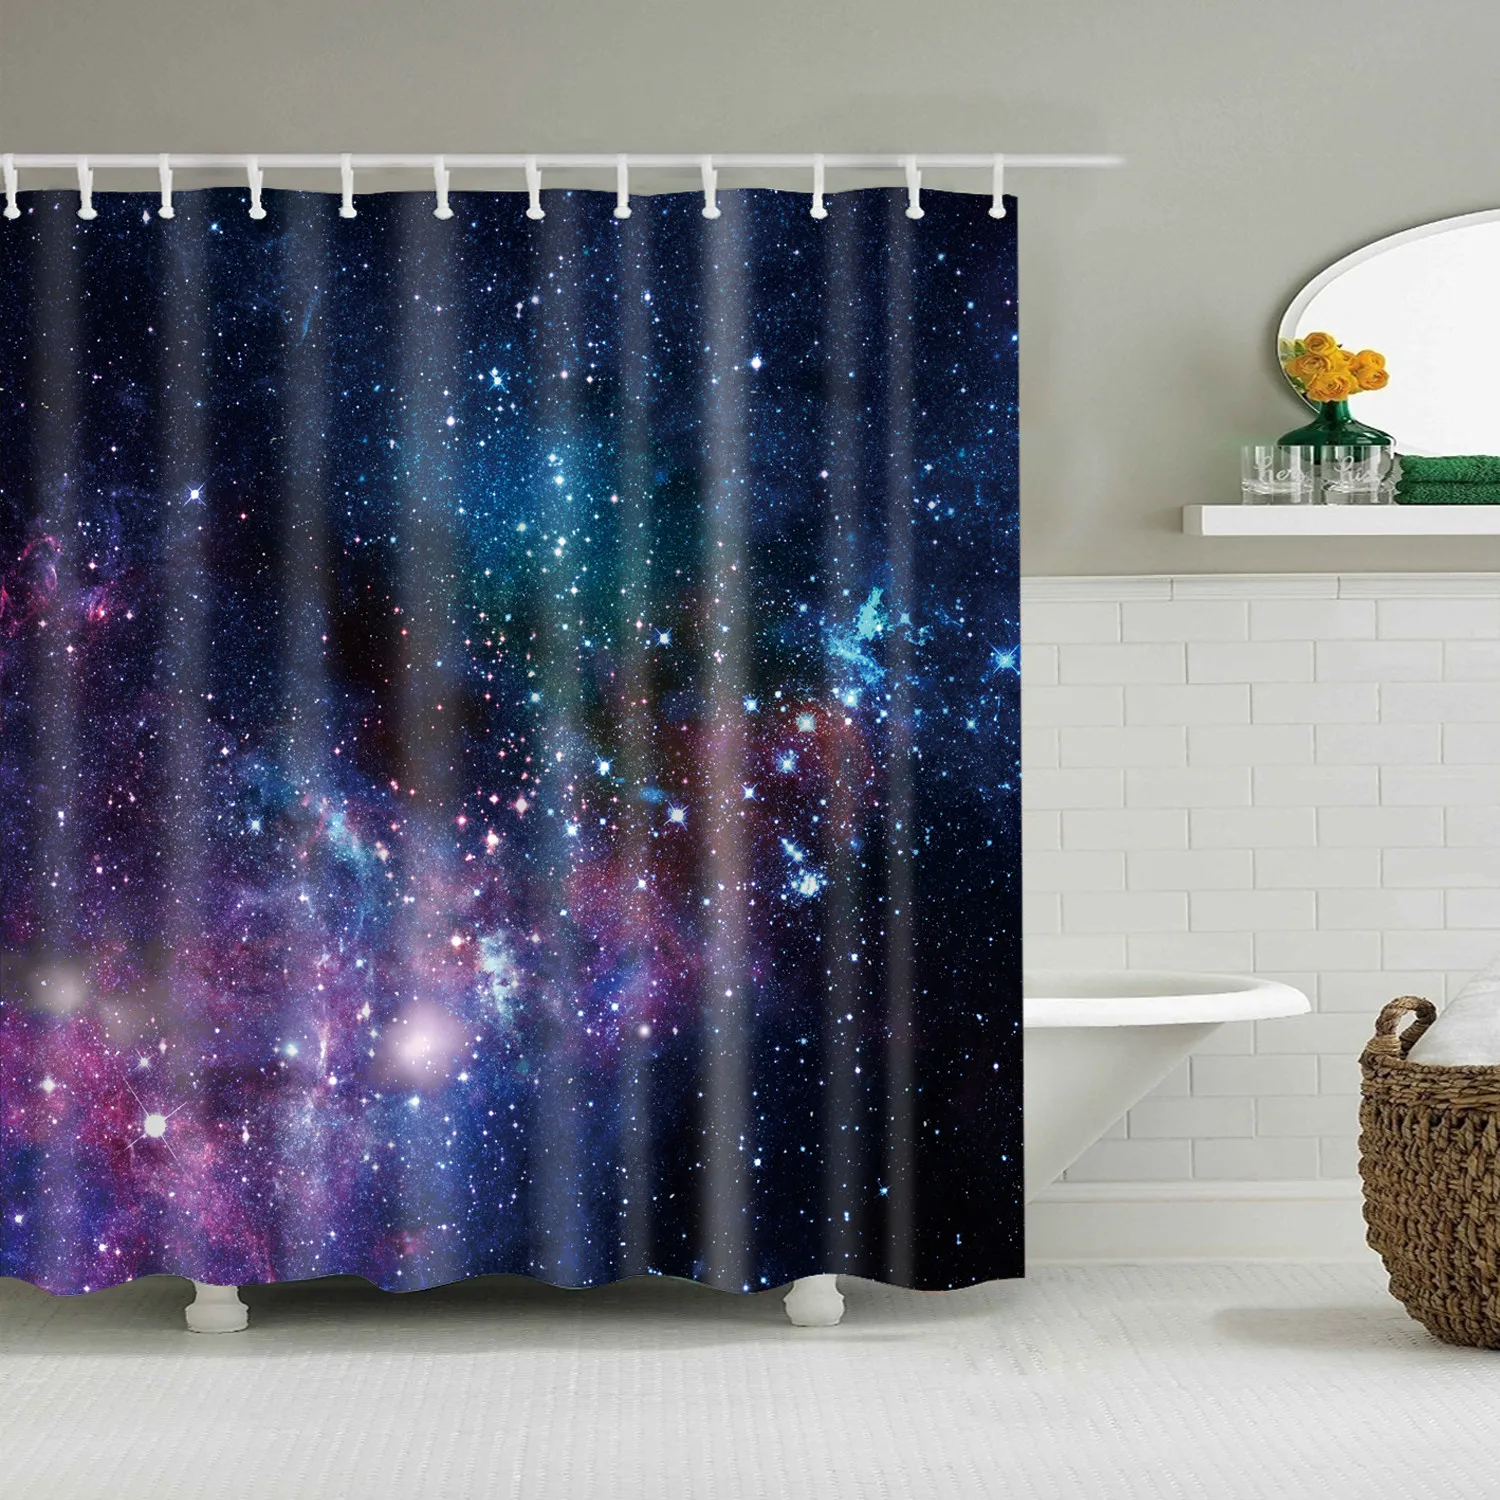 

Galaxy Night Starry Sky Bath Curtain 180x200cm Waterproof Polyester Fabric Shower Curtain 3D Blackout Curtain for Bathroom